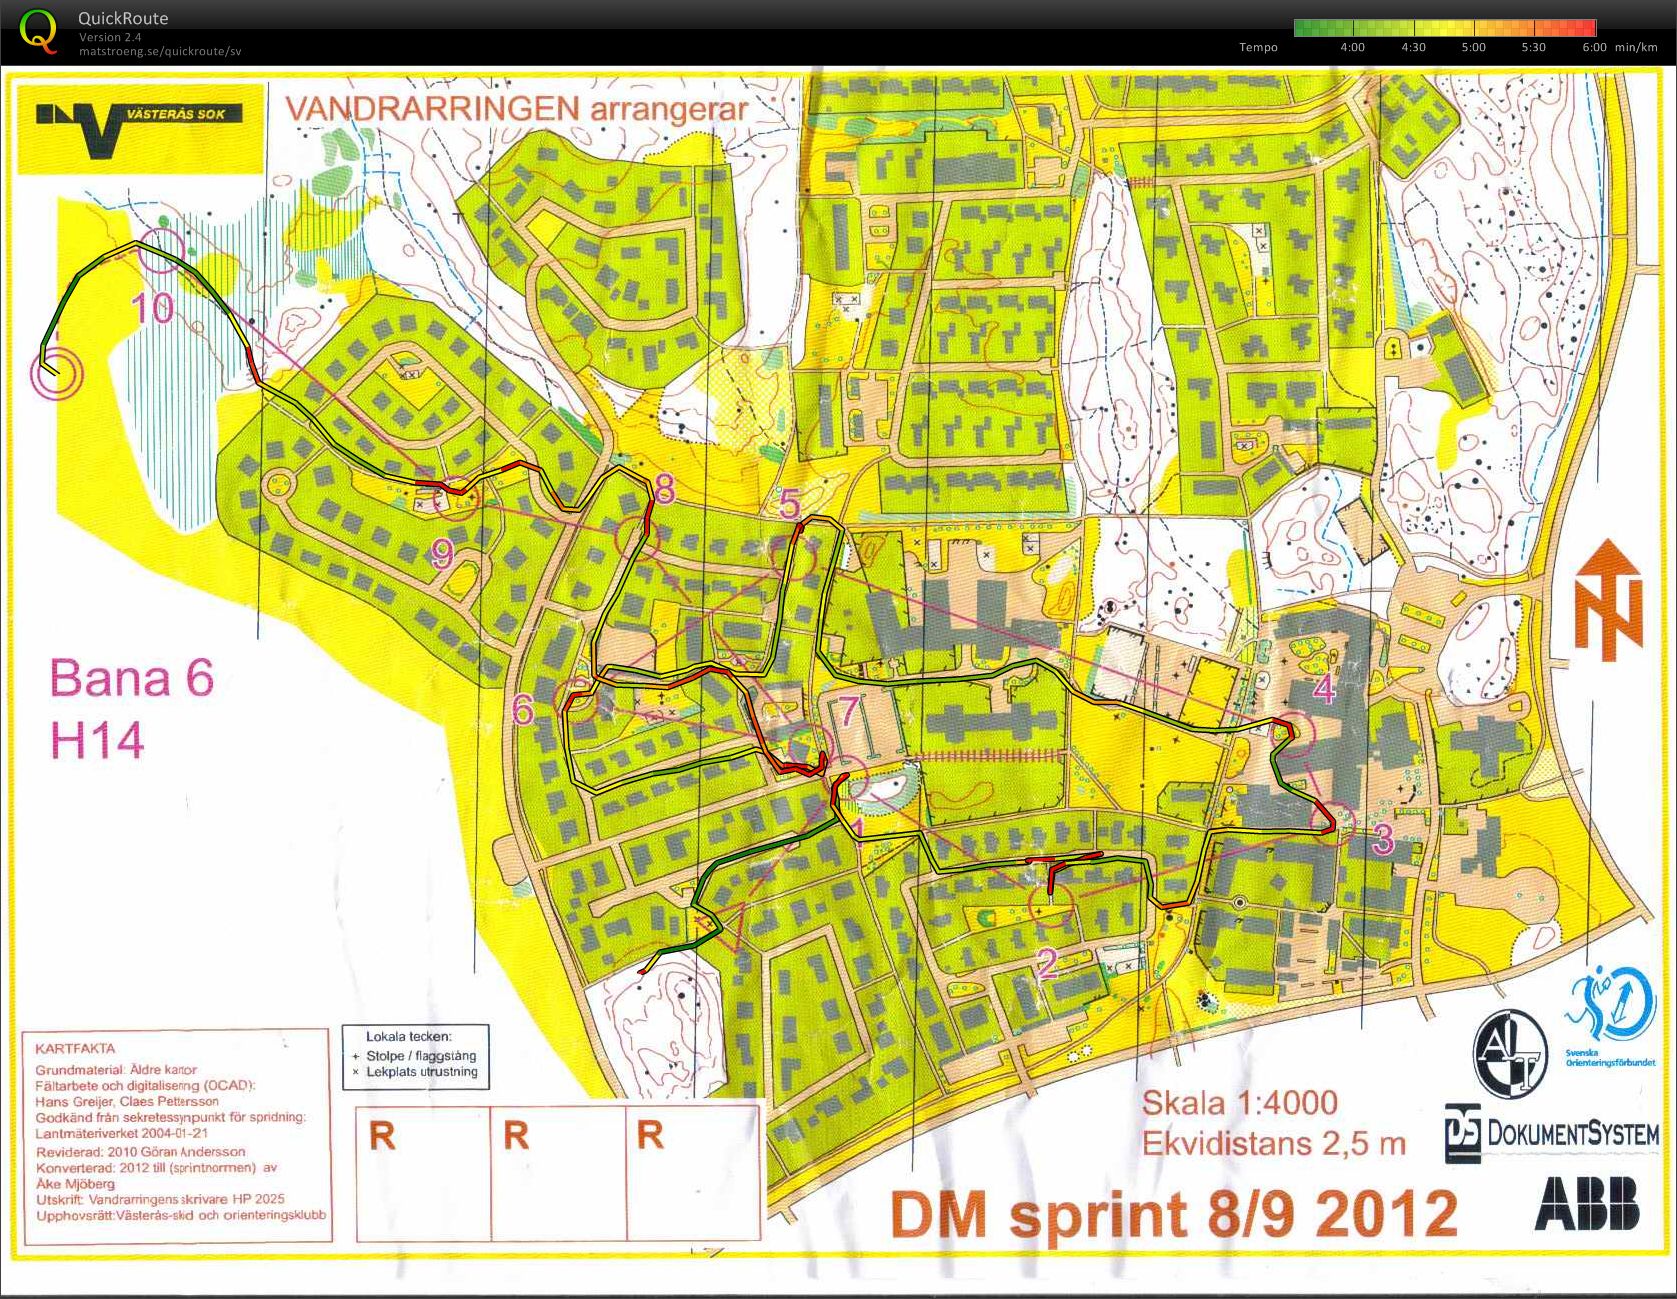 dm sprint 2012 (2012-09-08)